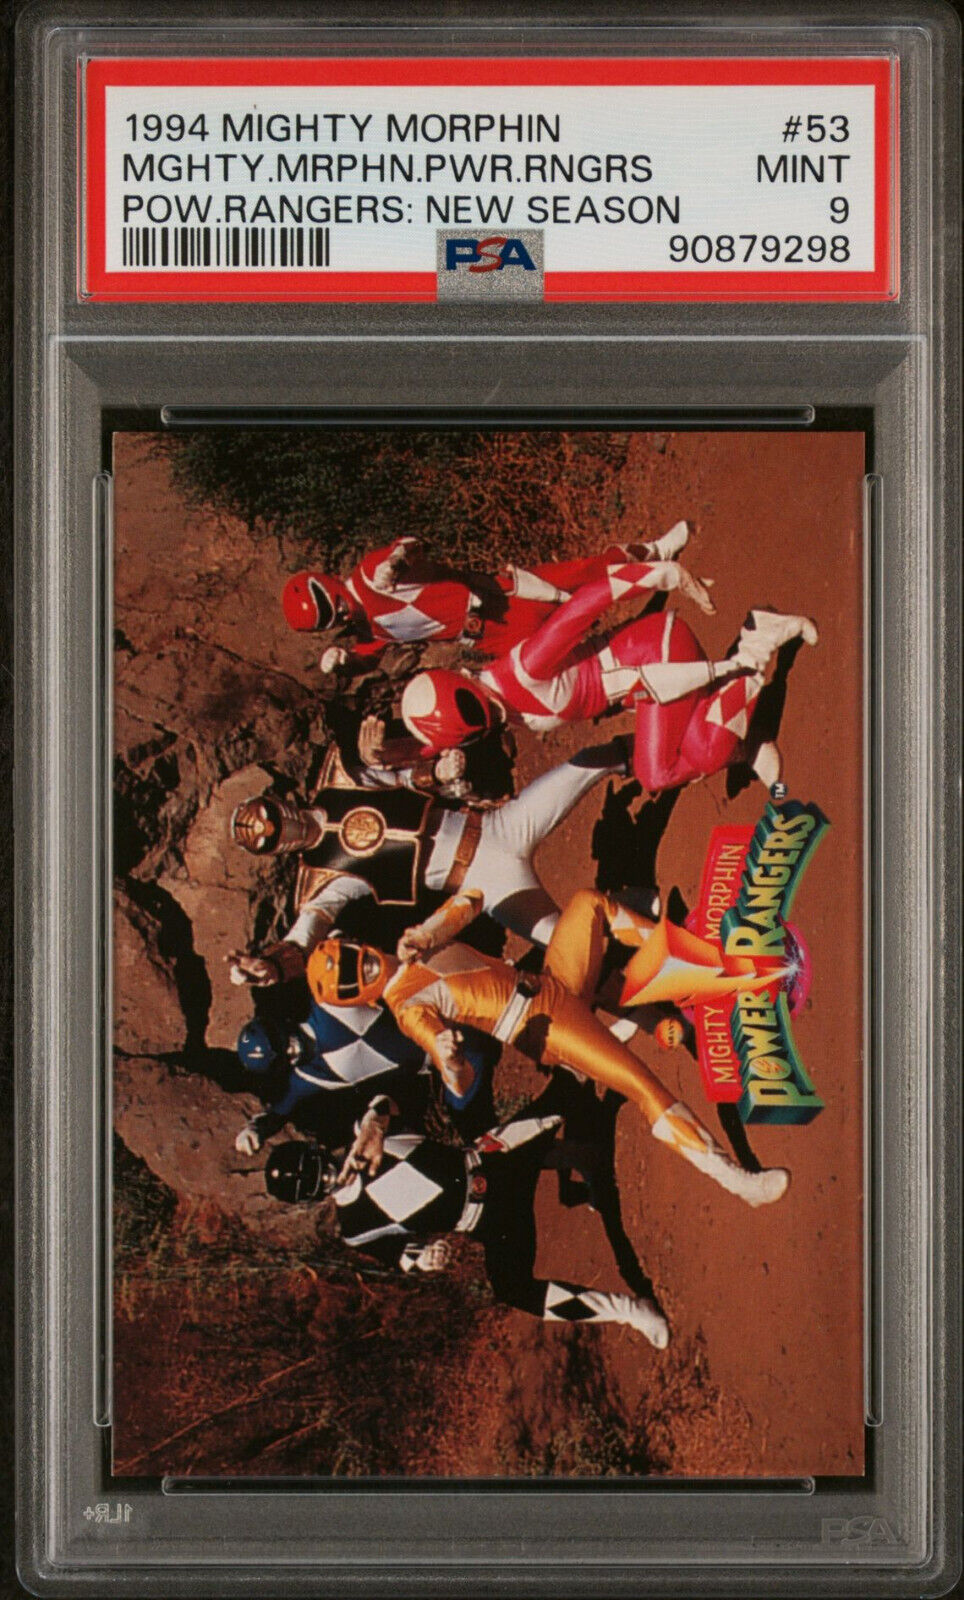 1994 Power Rangers: The New Season #53 Mighty Morphin Power Rangers PSA 9 Mint